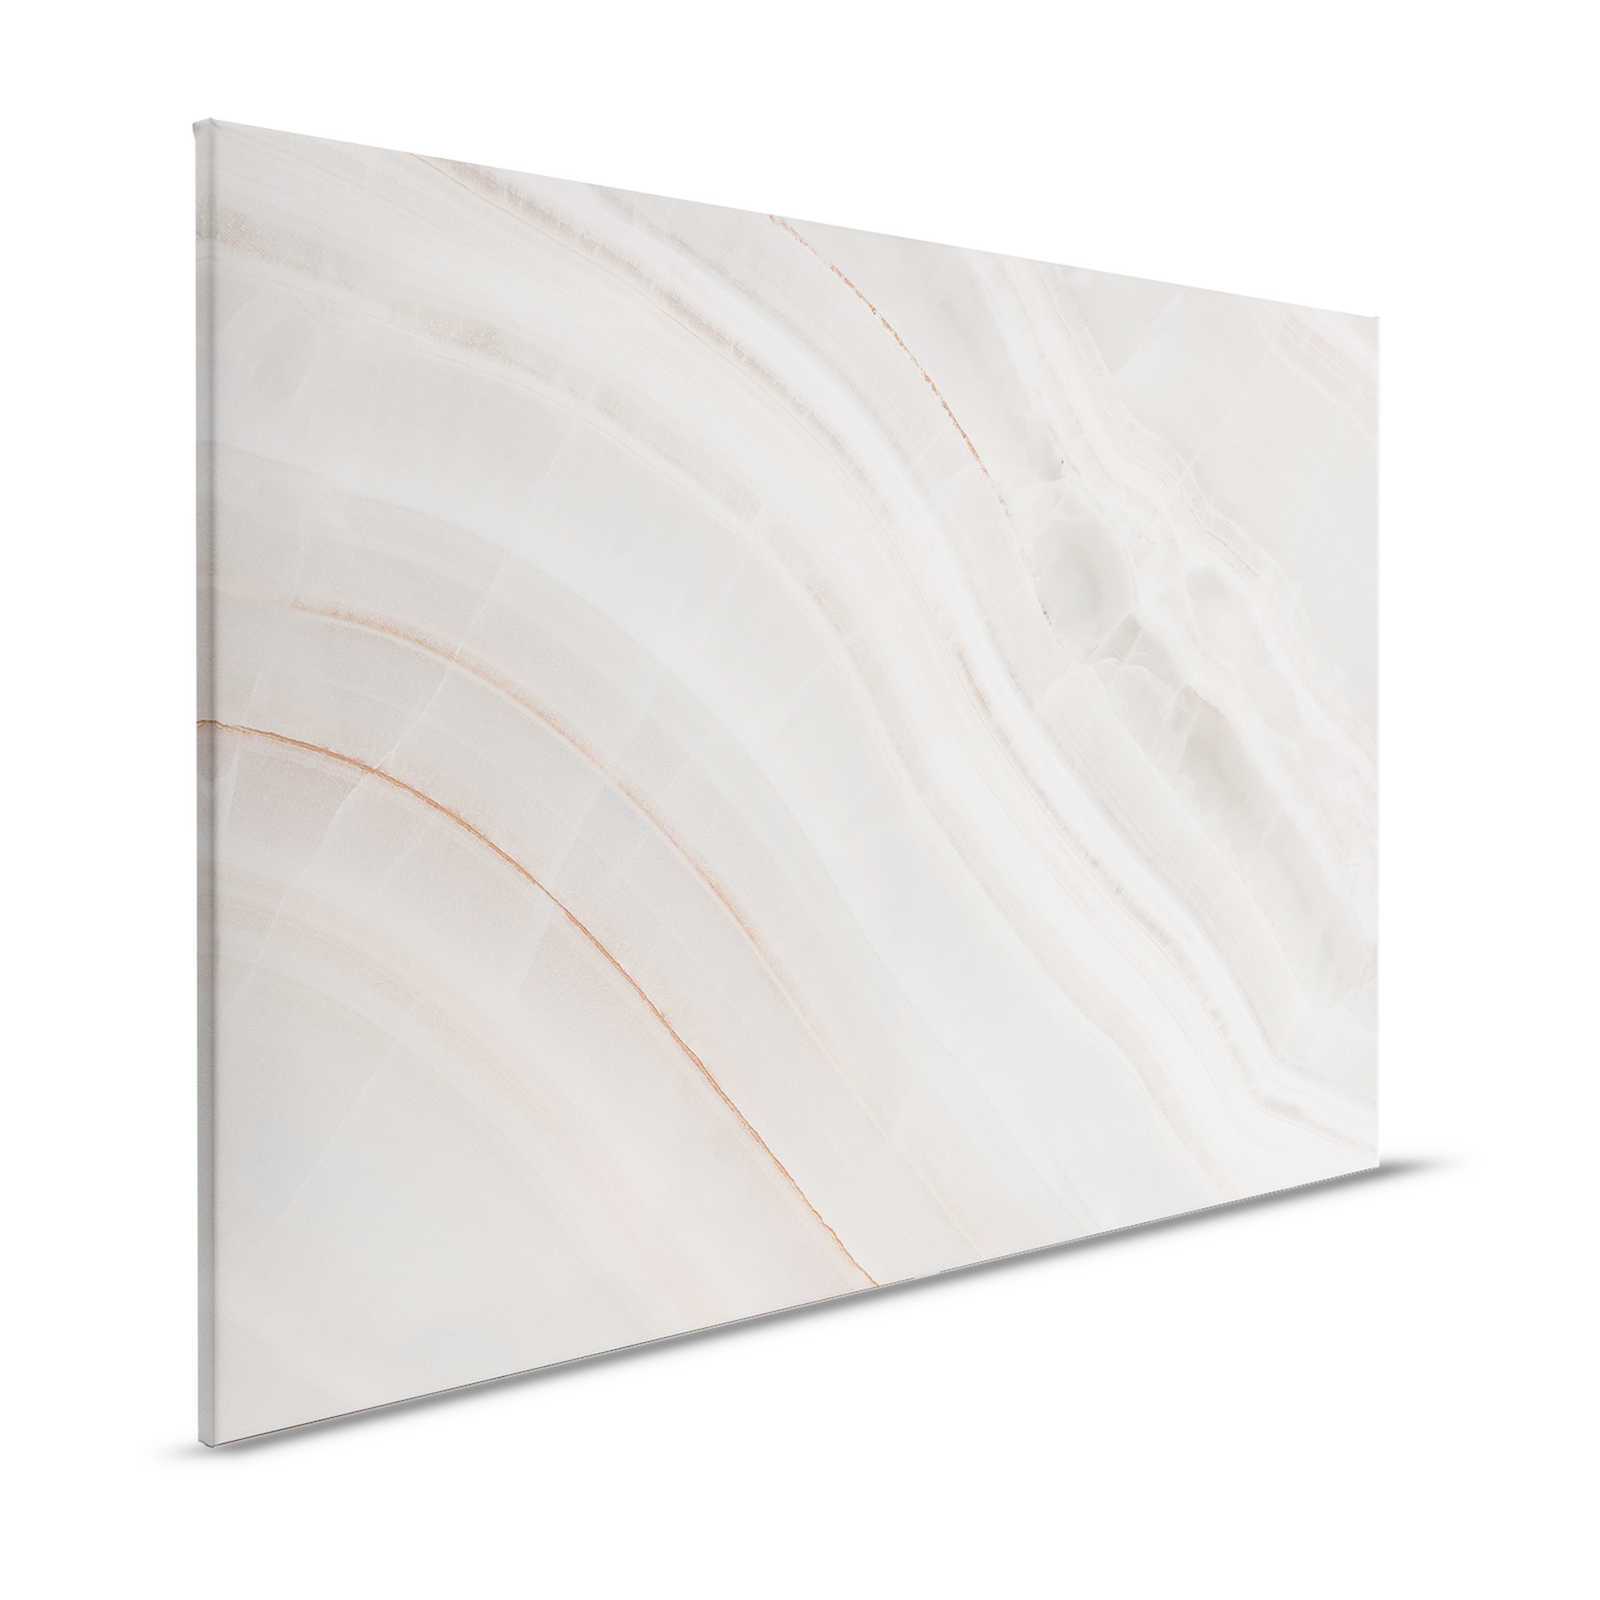 Cuadro sobre lienzo de mármol con panel de piedra jaspeada - 1,20 m x 0,80 m
